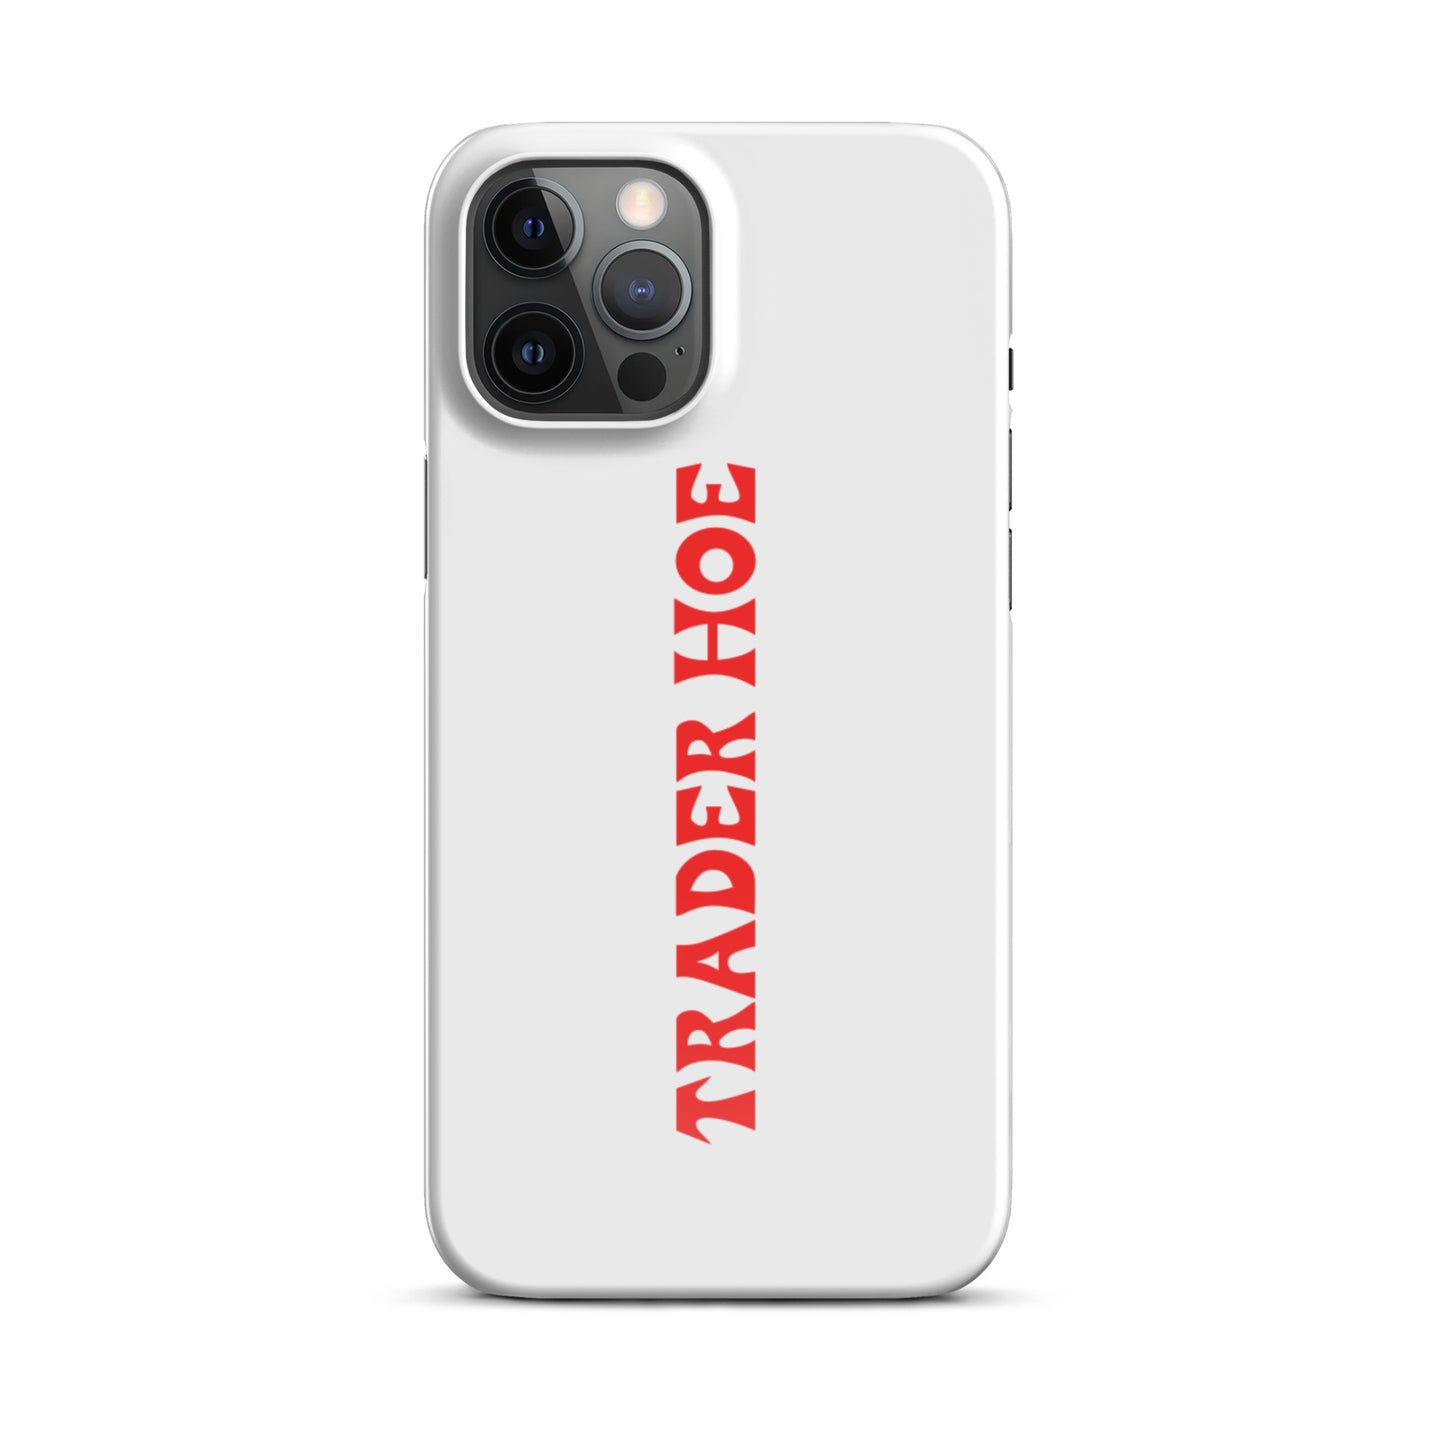 Trader Hoe IPhone Case